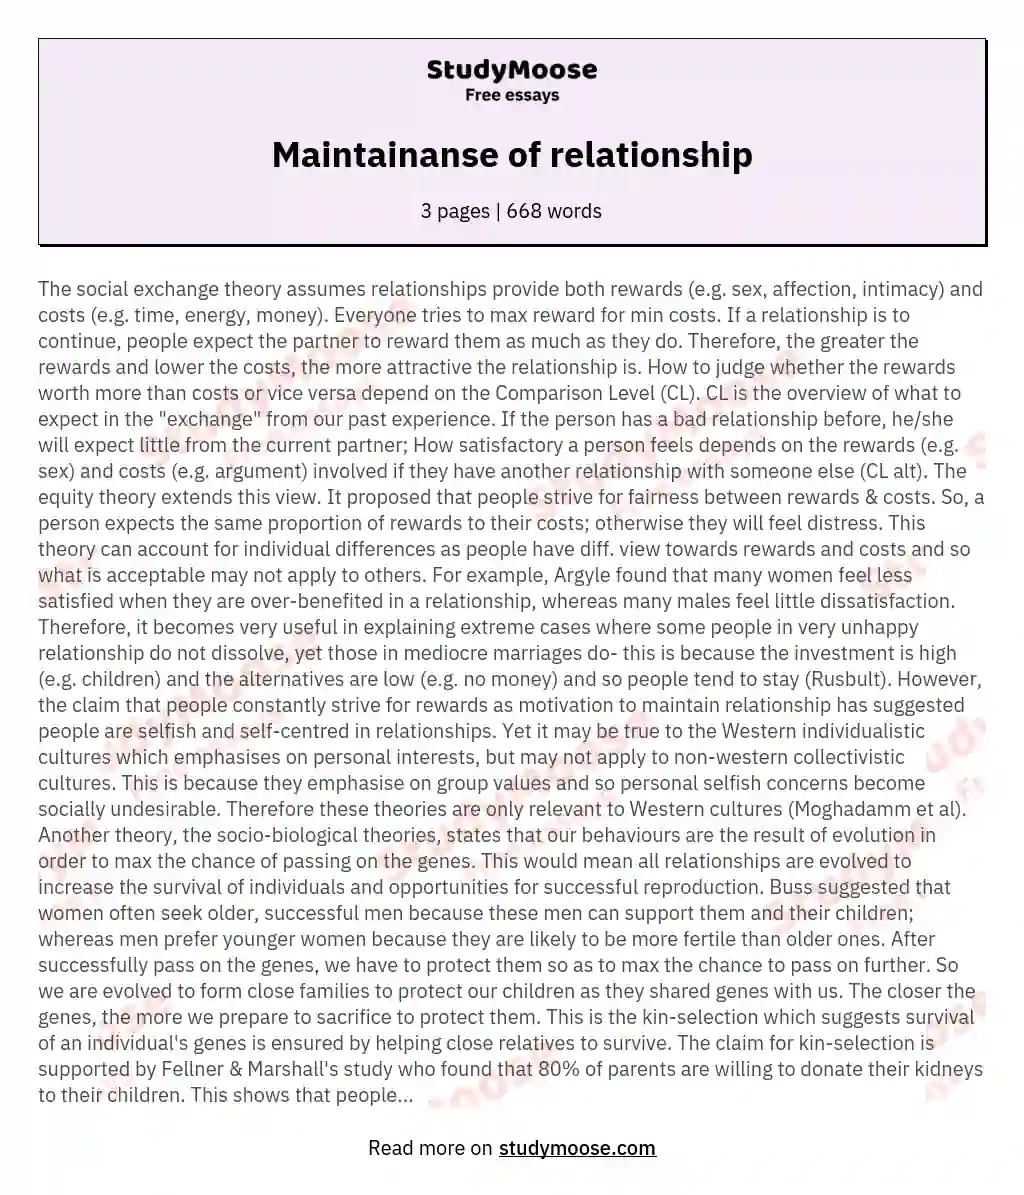 Maintainanse of relationship essay